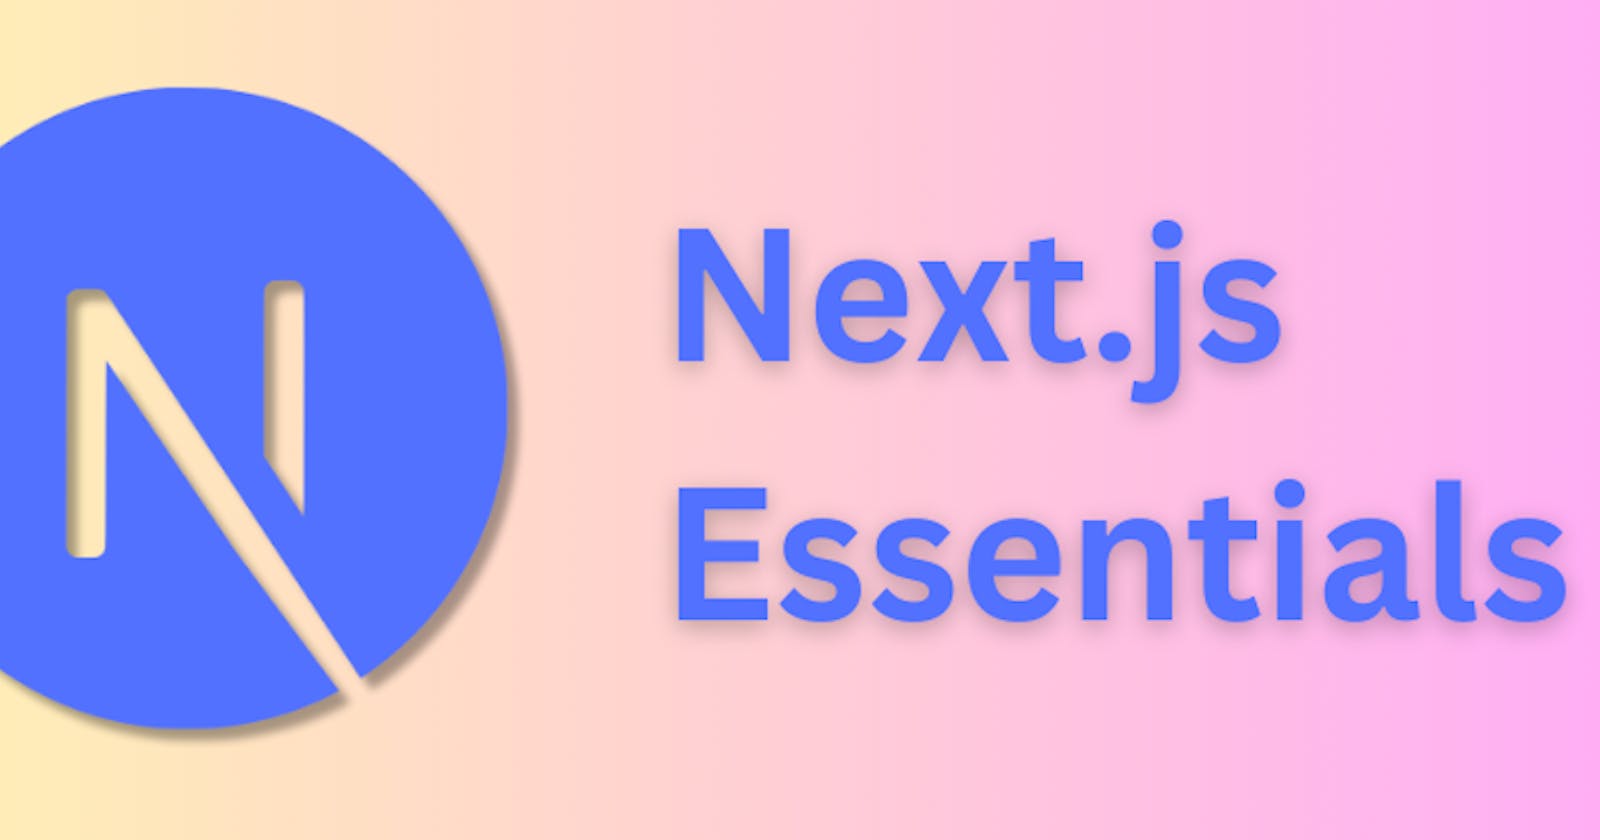 Next.js Essentials, Part 1: Introduction